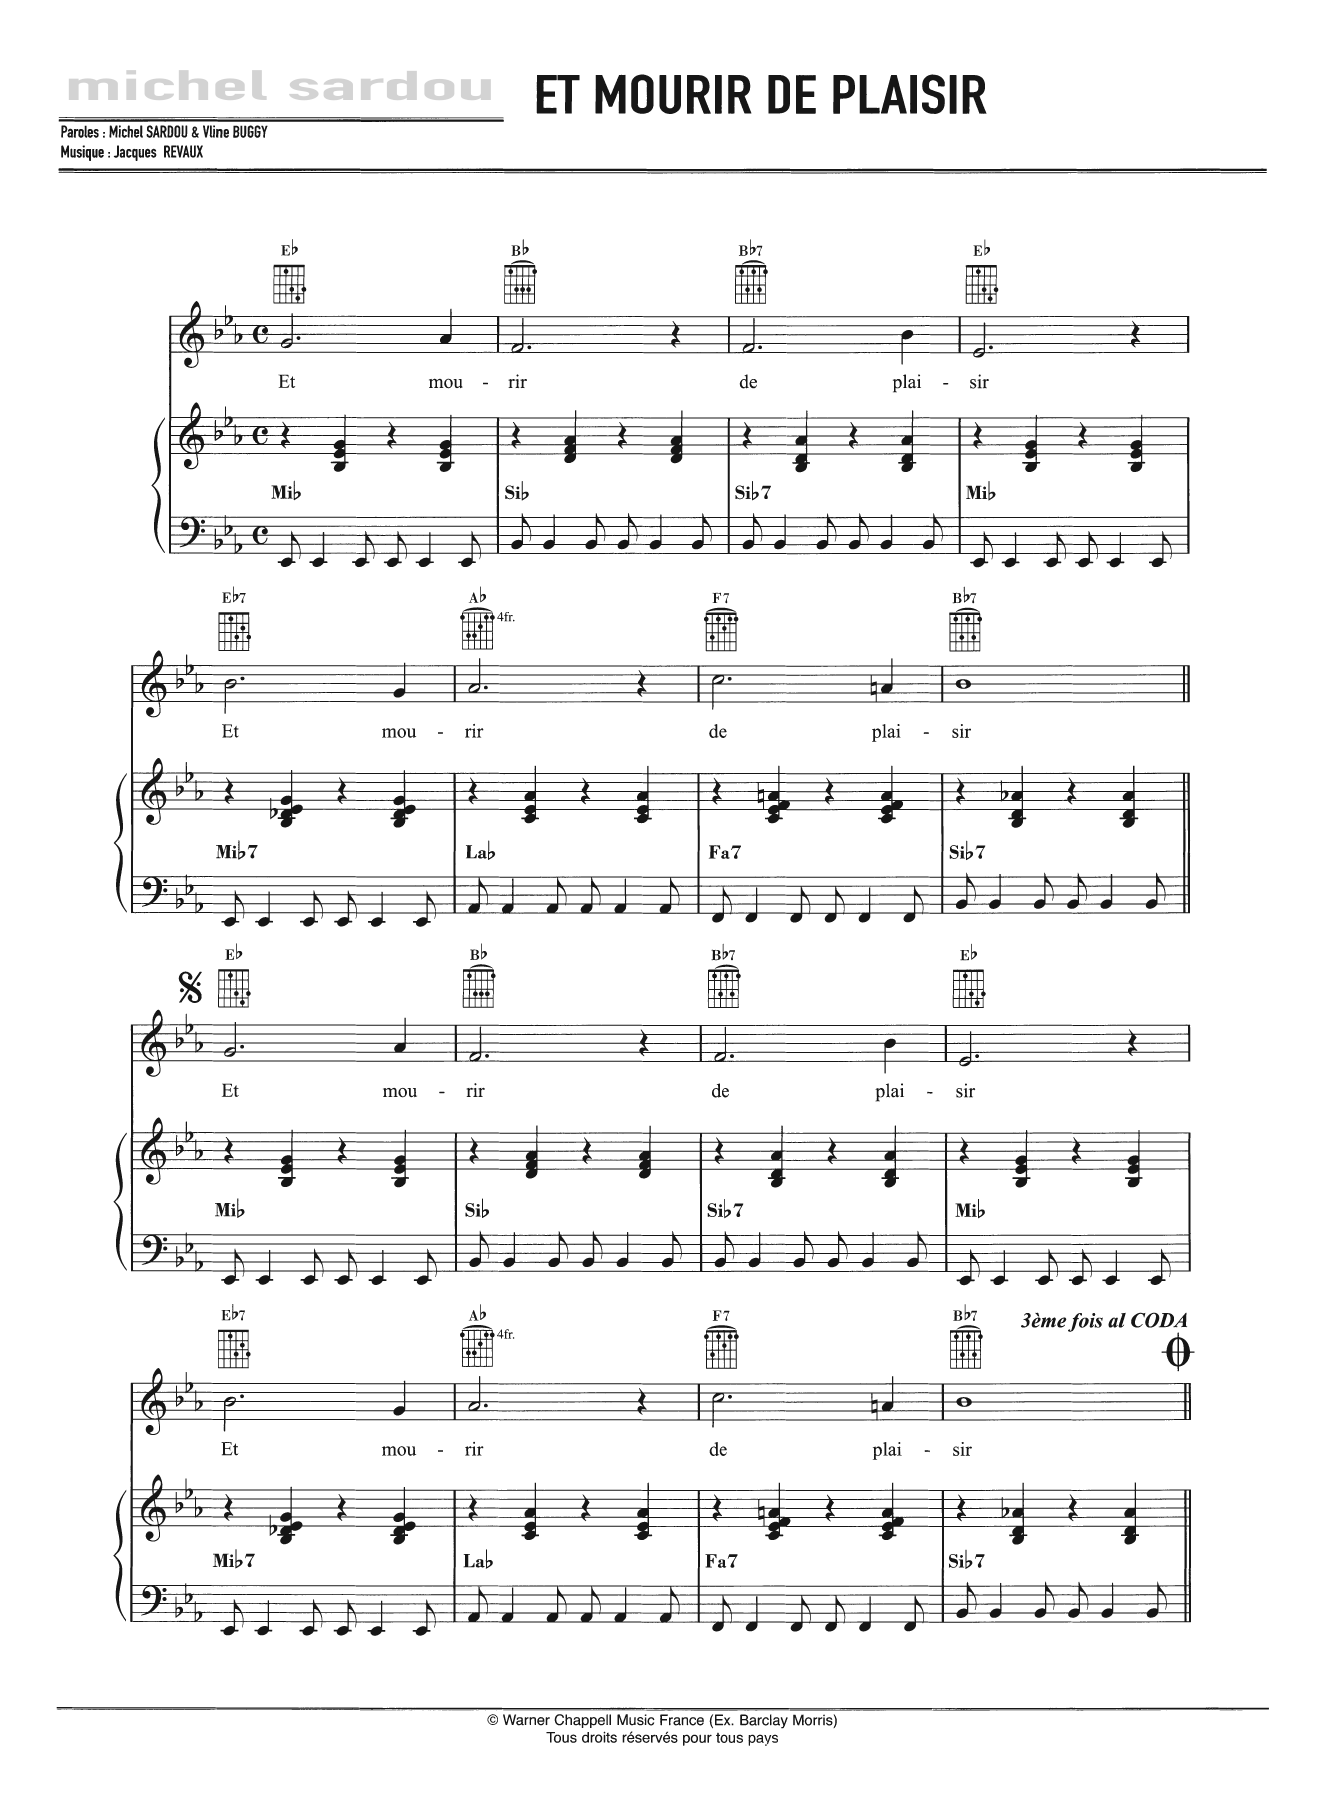 Michel Sardou Et Mourir De Plaisir Sheet Music Notes & Chords for Piano, Vocal & Guitar - Download or Print PDF